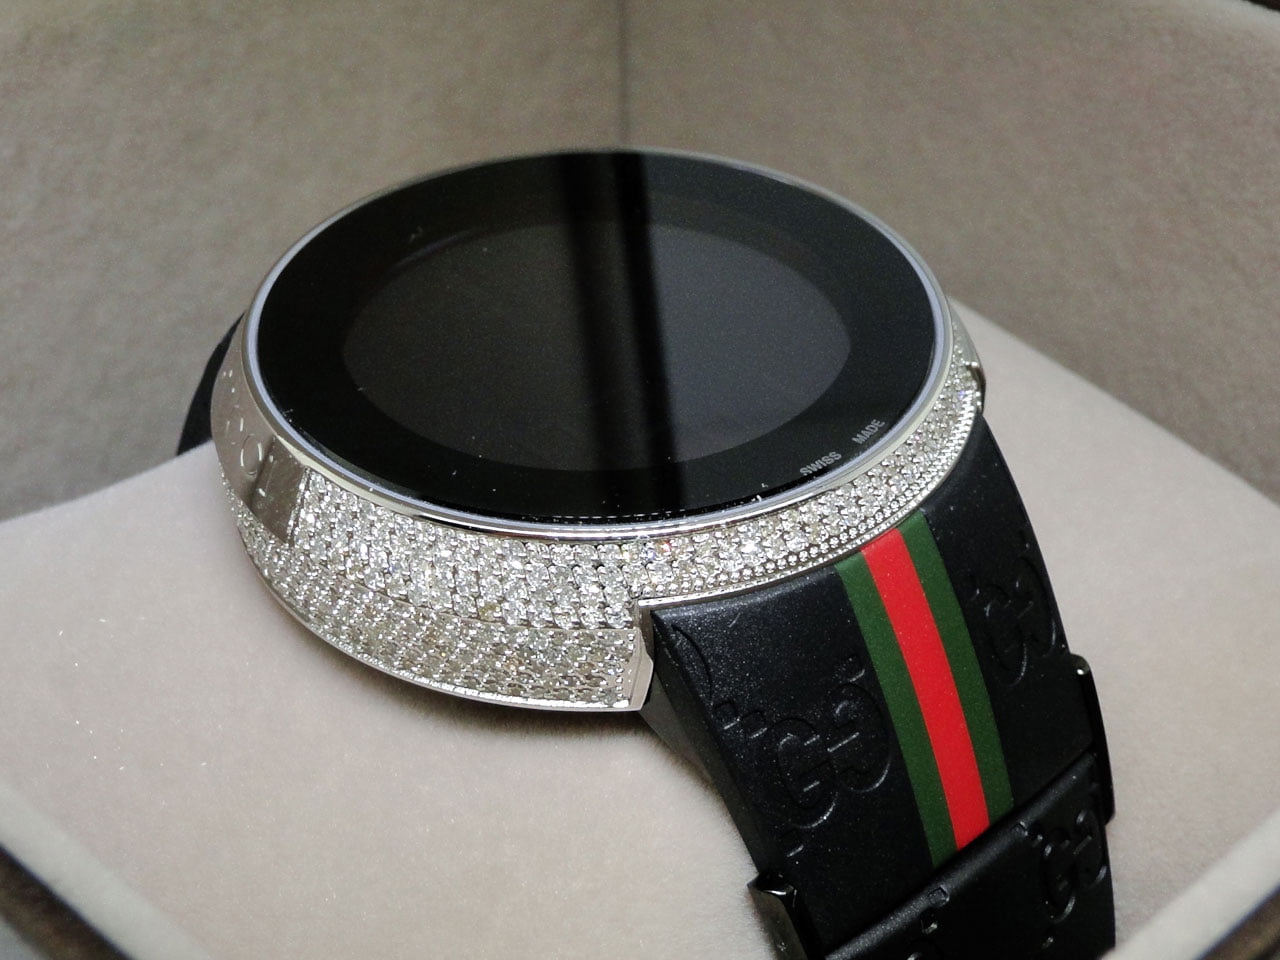 diamond digital watch